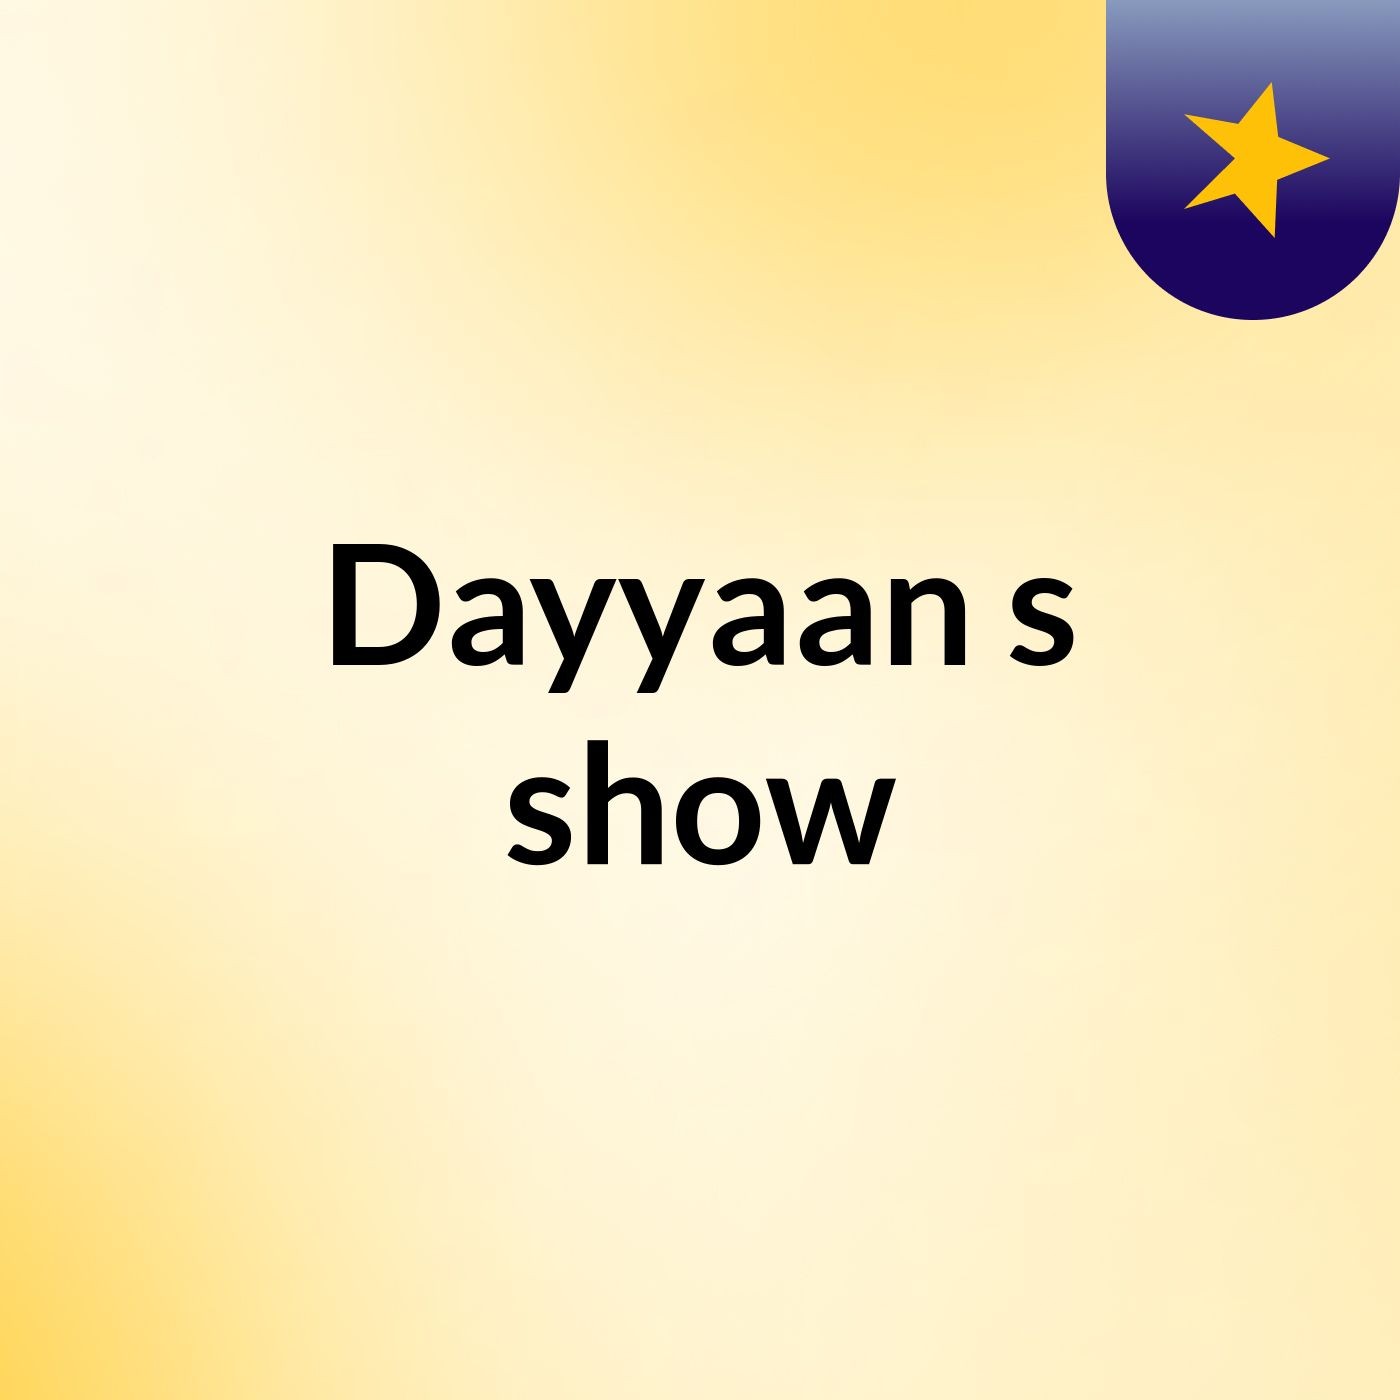 Dayyaan's show